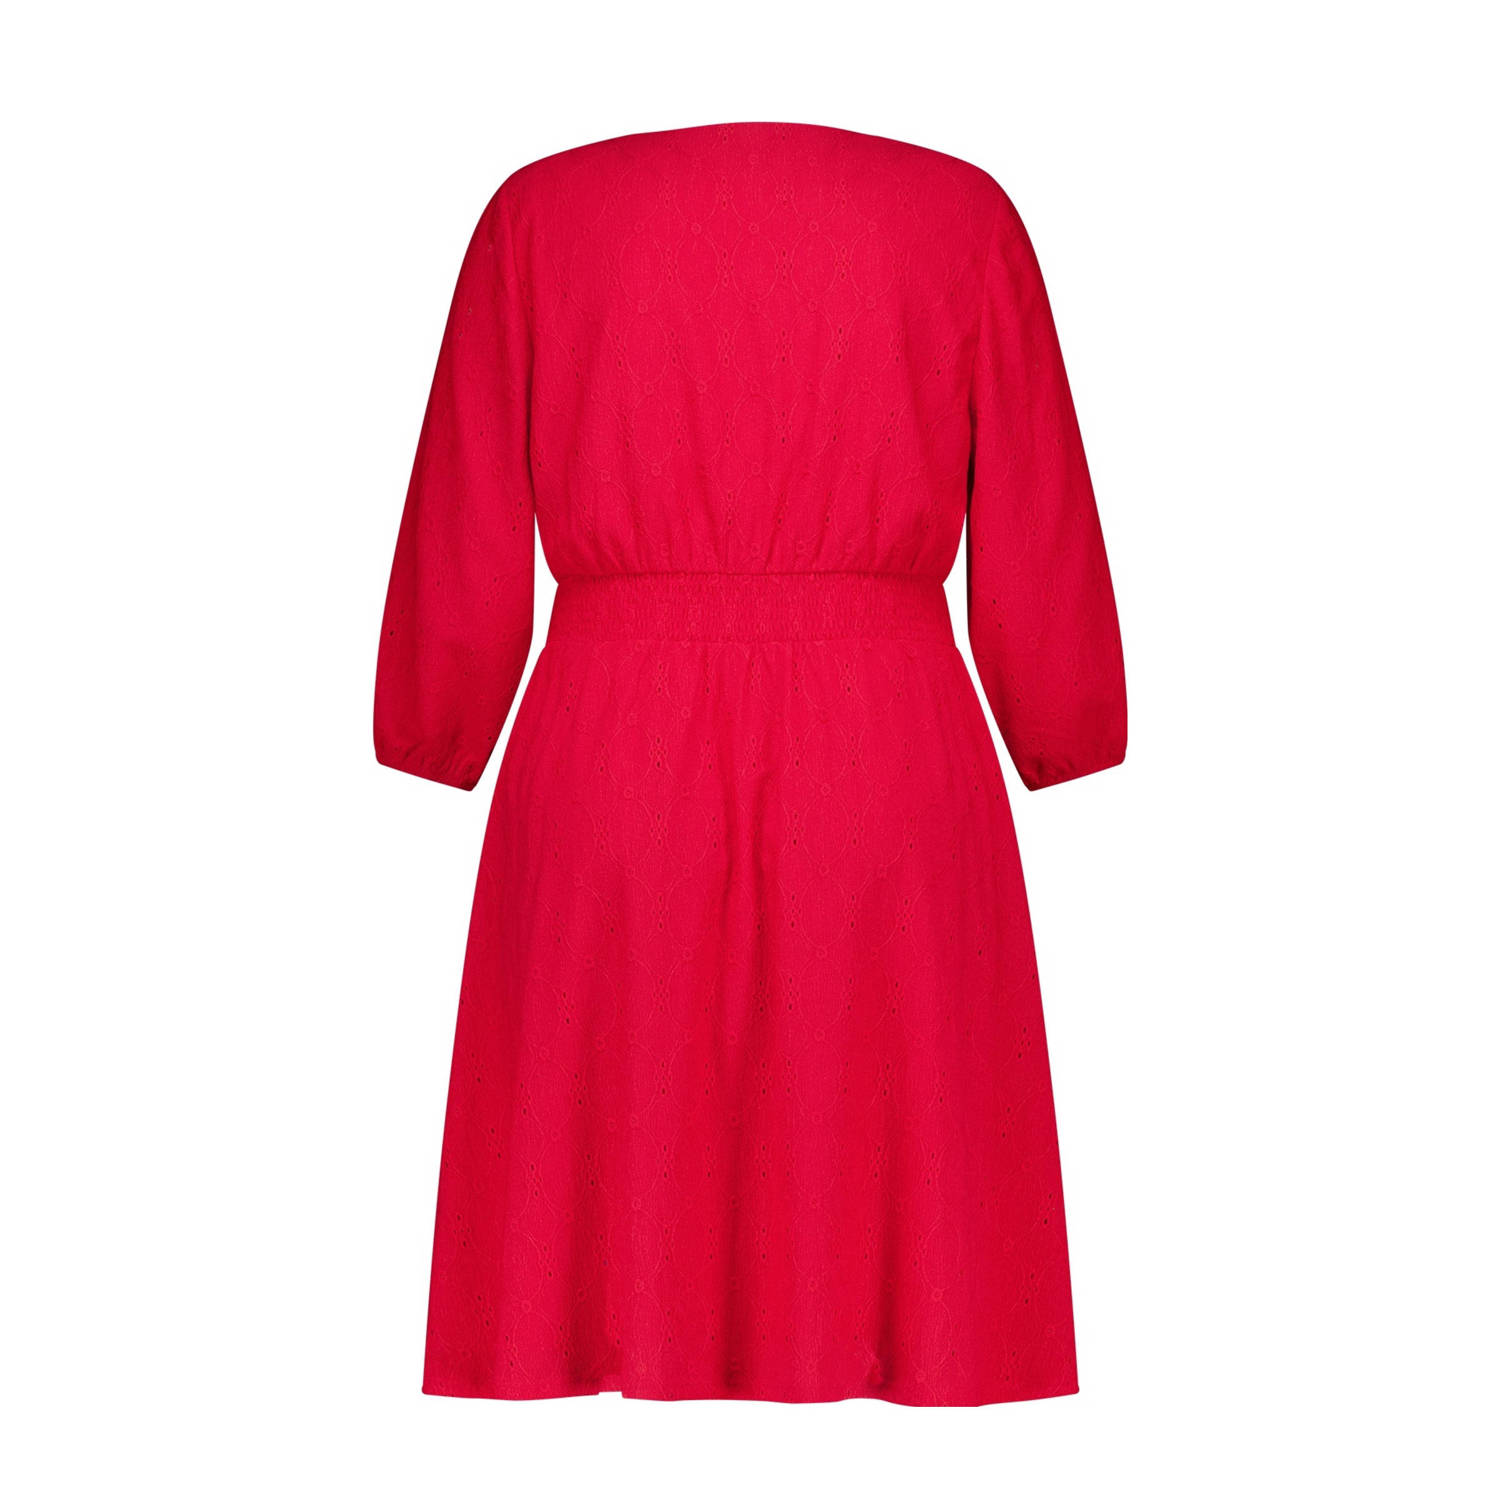 MS Mode jurk rood